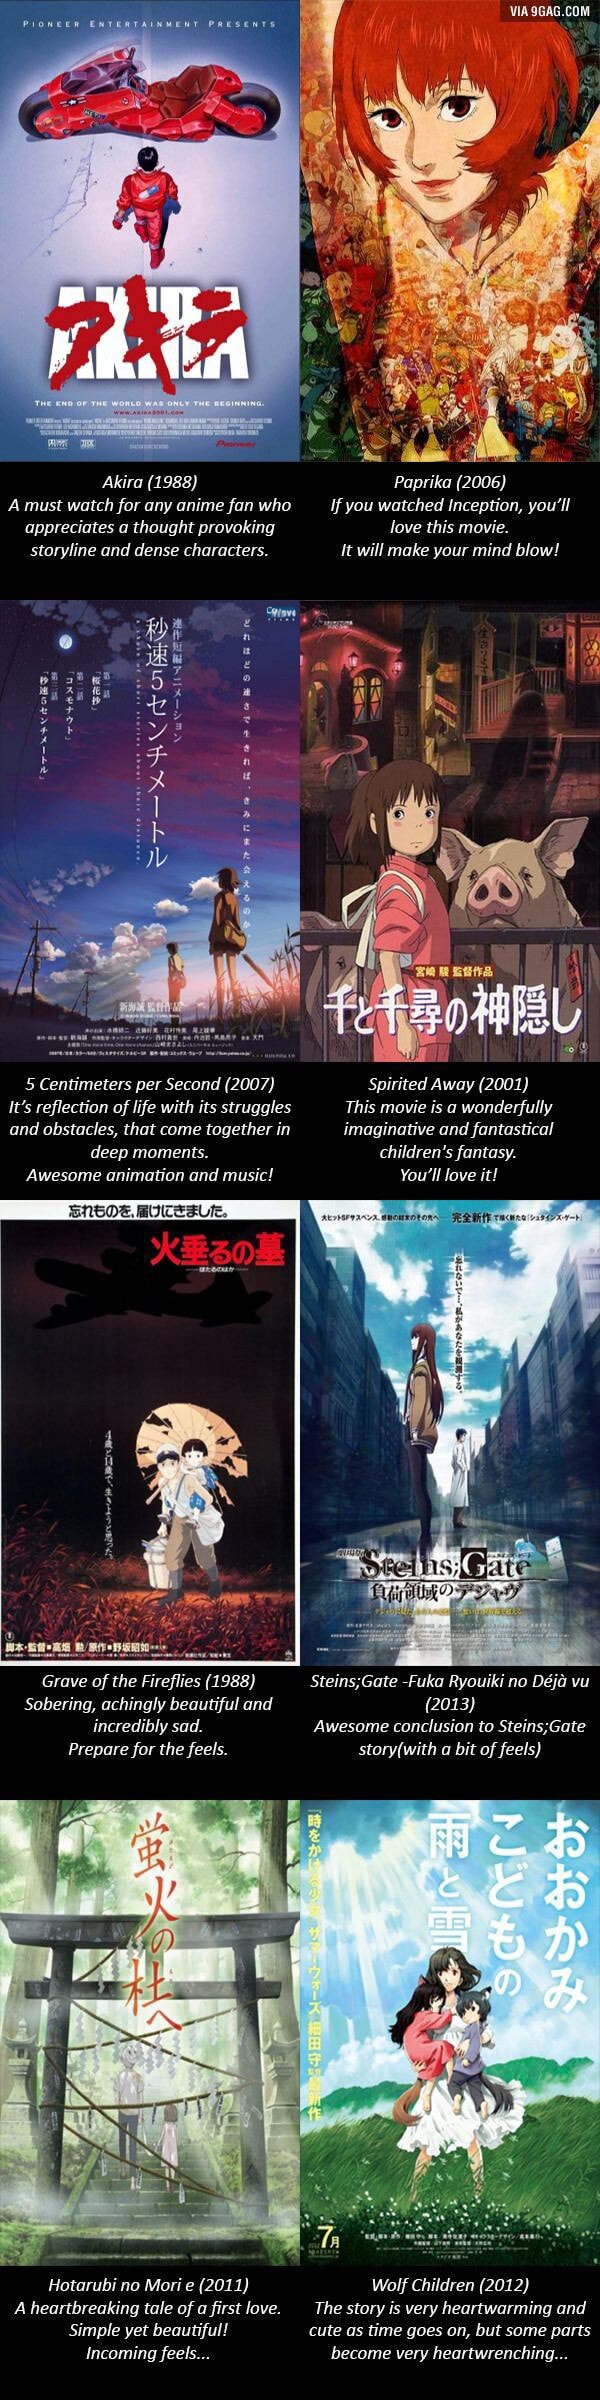 Whats a sad anime? On Netflix - Quora